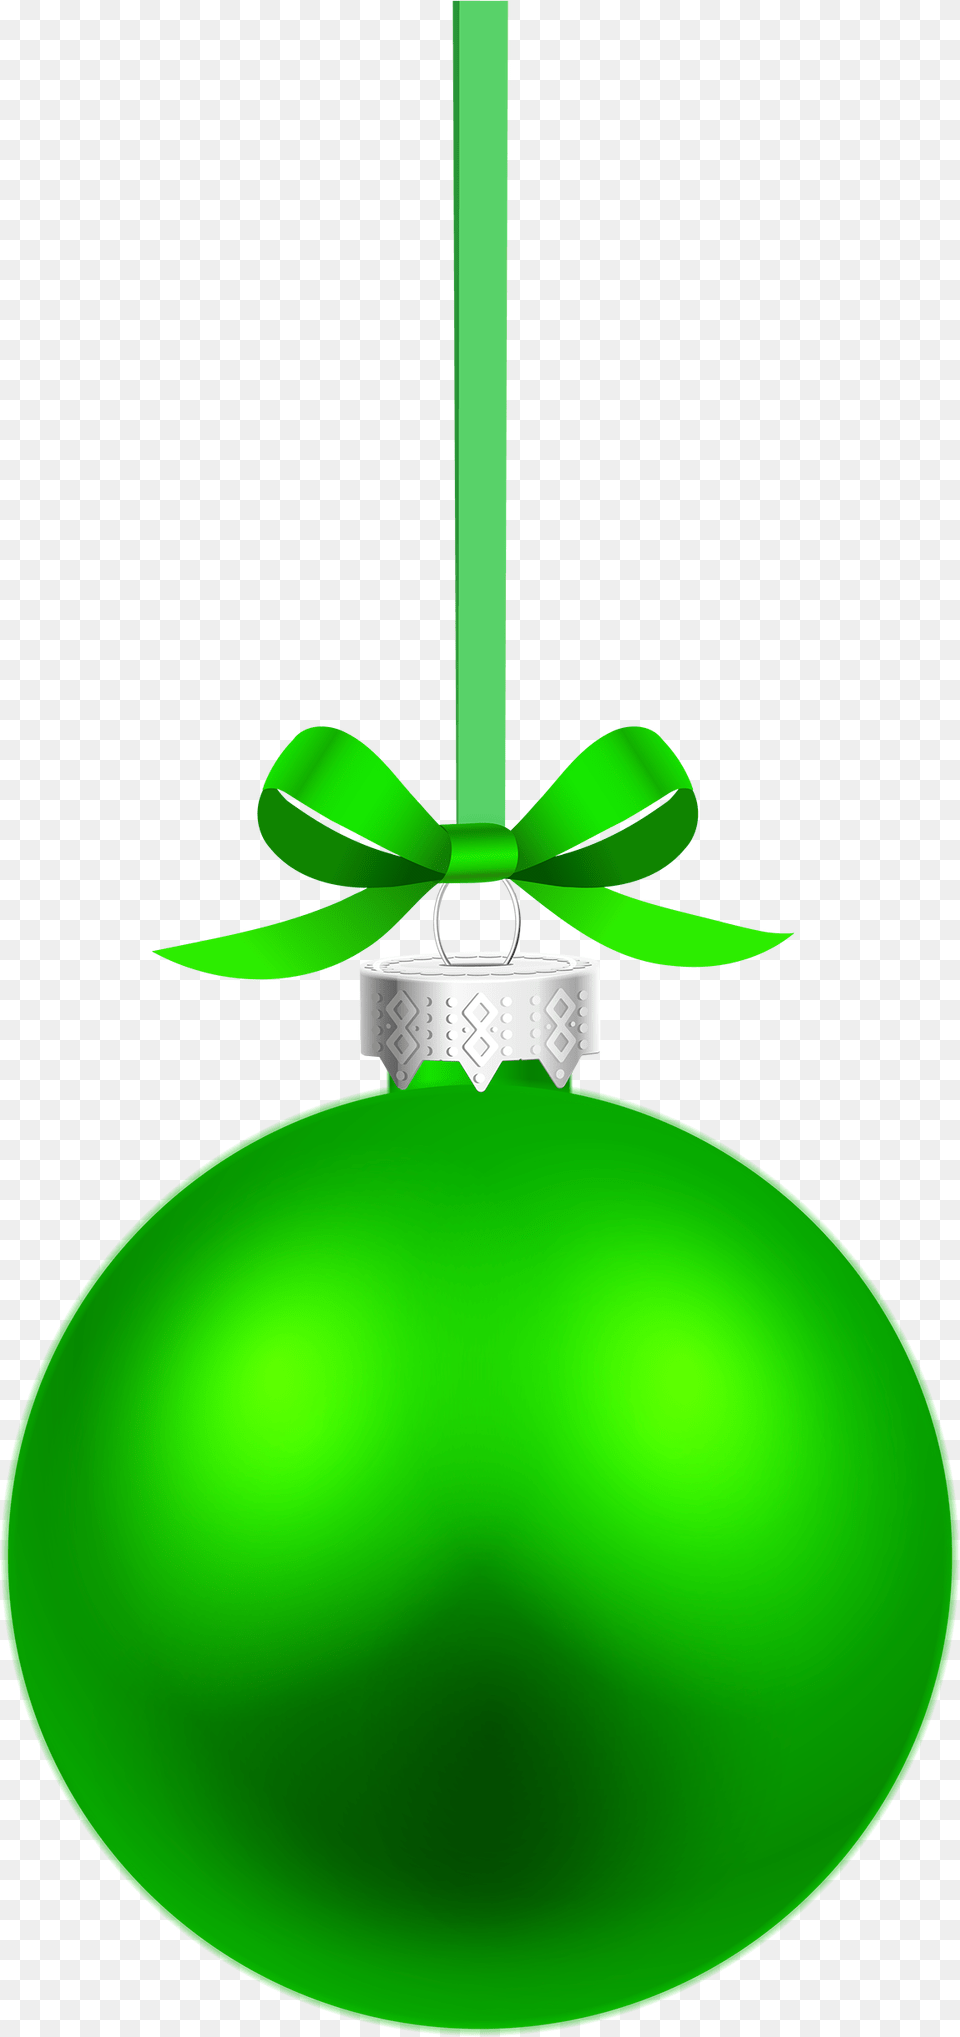 Green Hanging Christmas Ball Clipart Green Hanging Christmas Ball, Accessories, Ornament Png Image